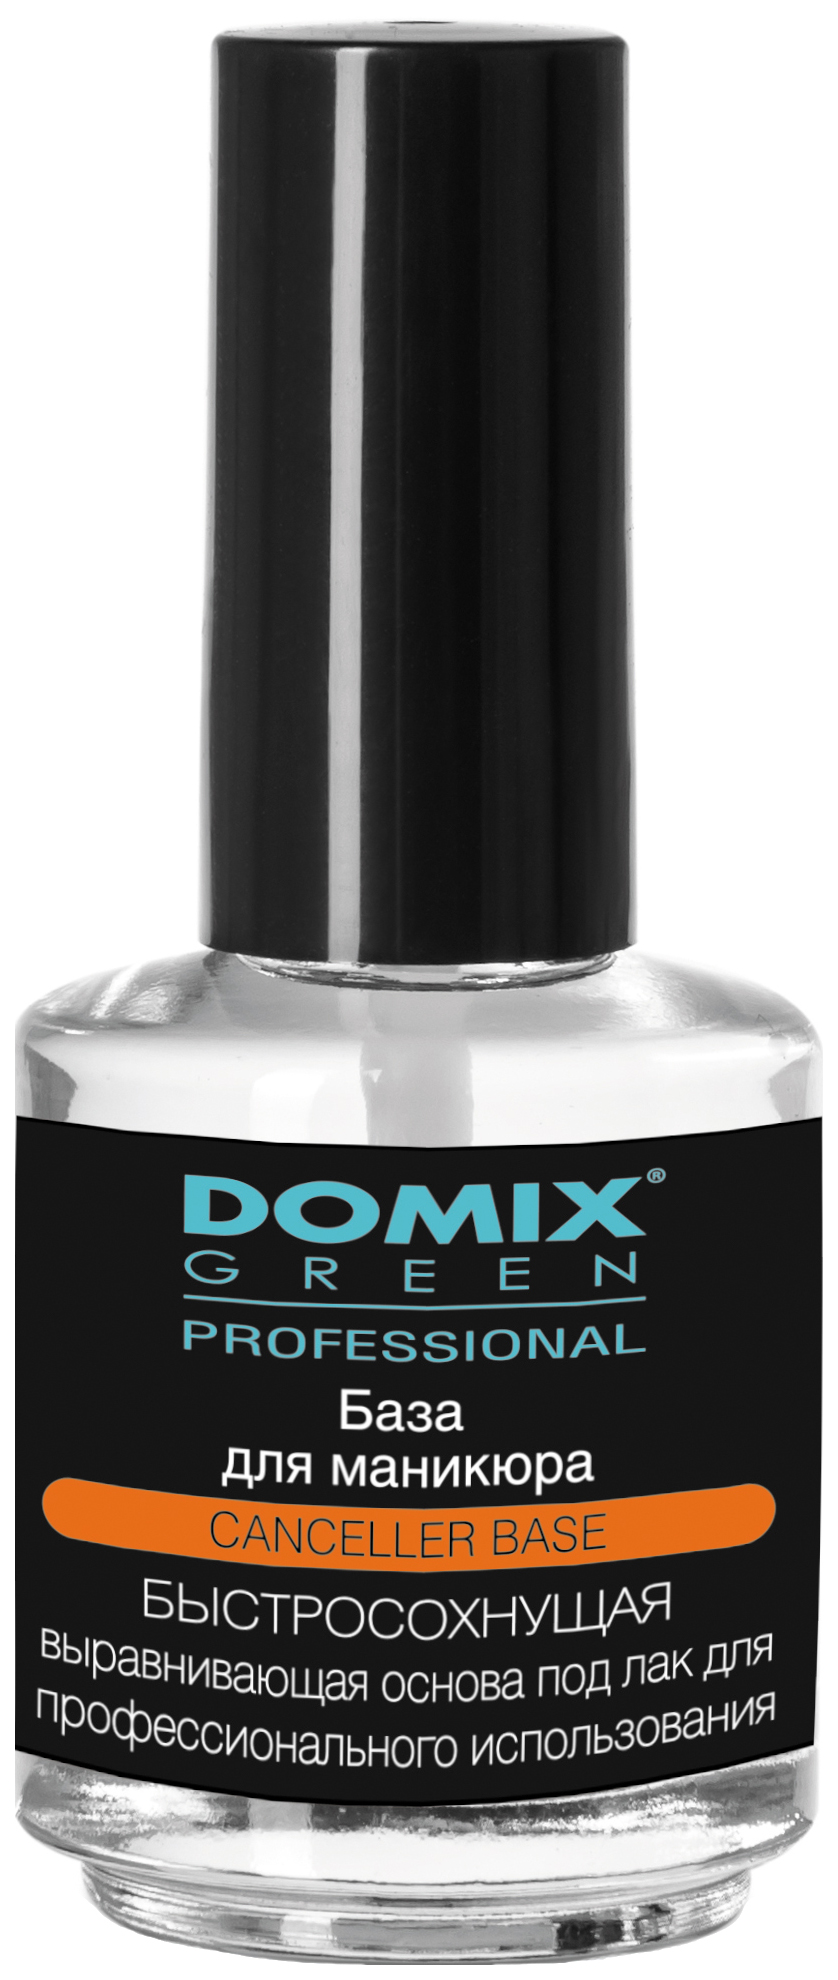 База Domix Green Professional Быстросохнущая 17 мл